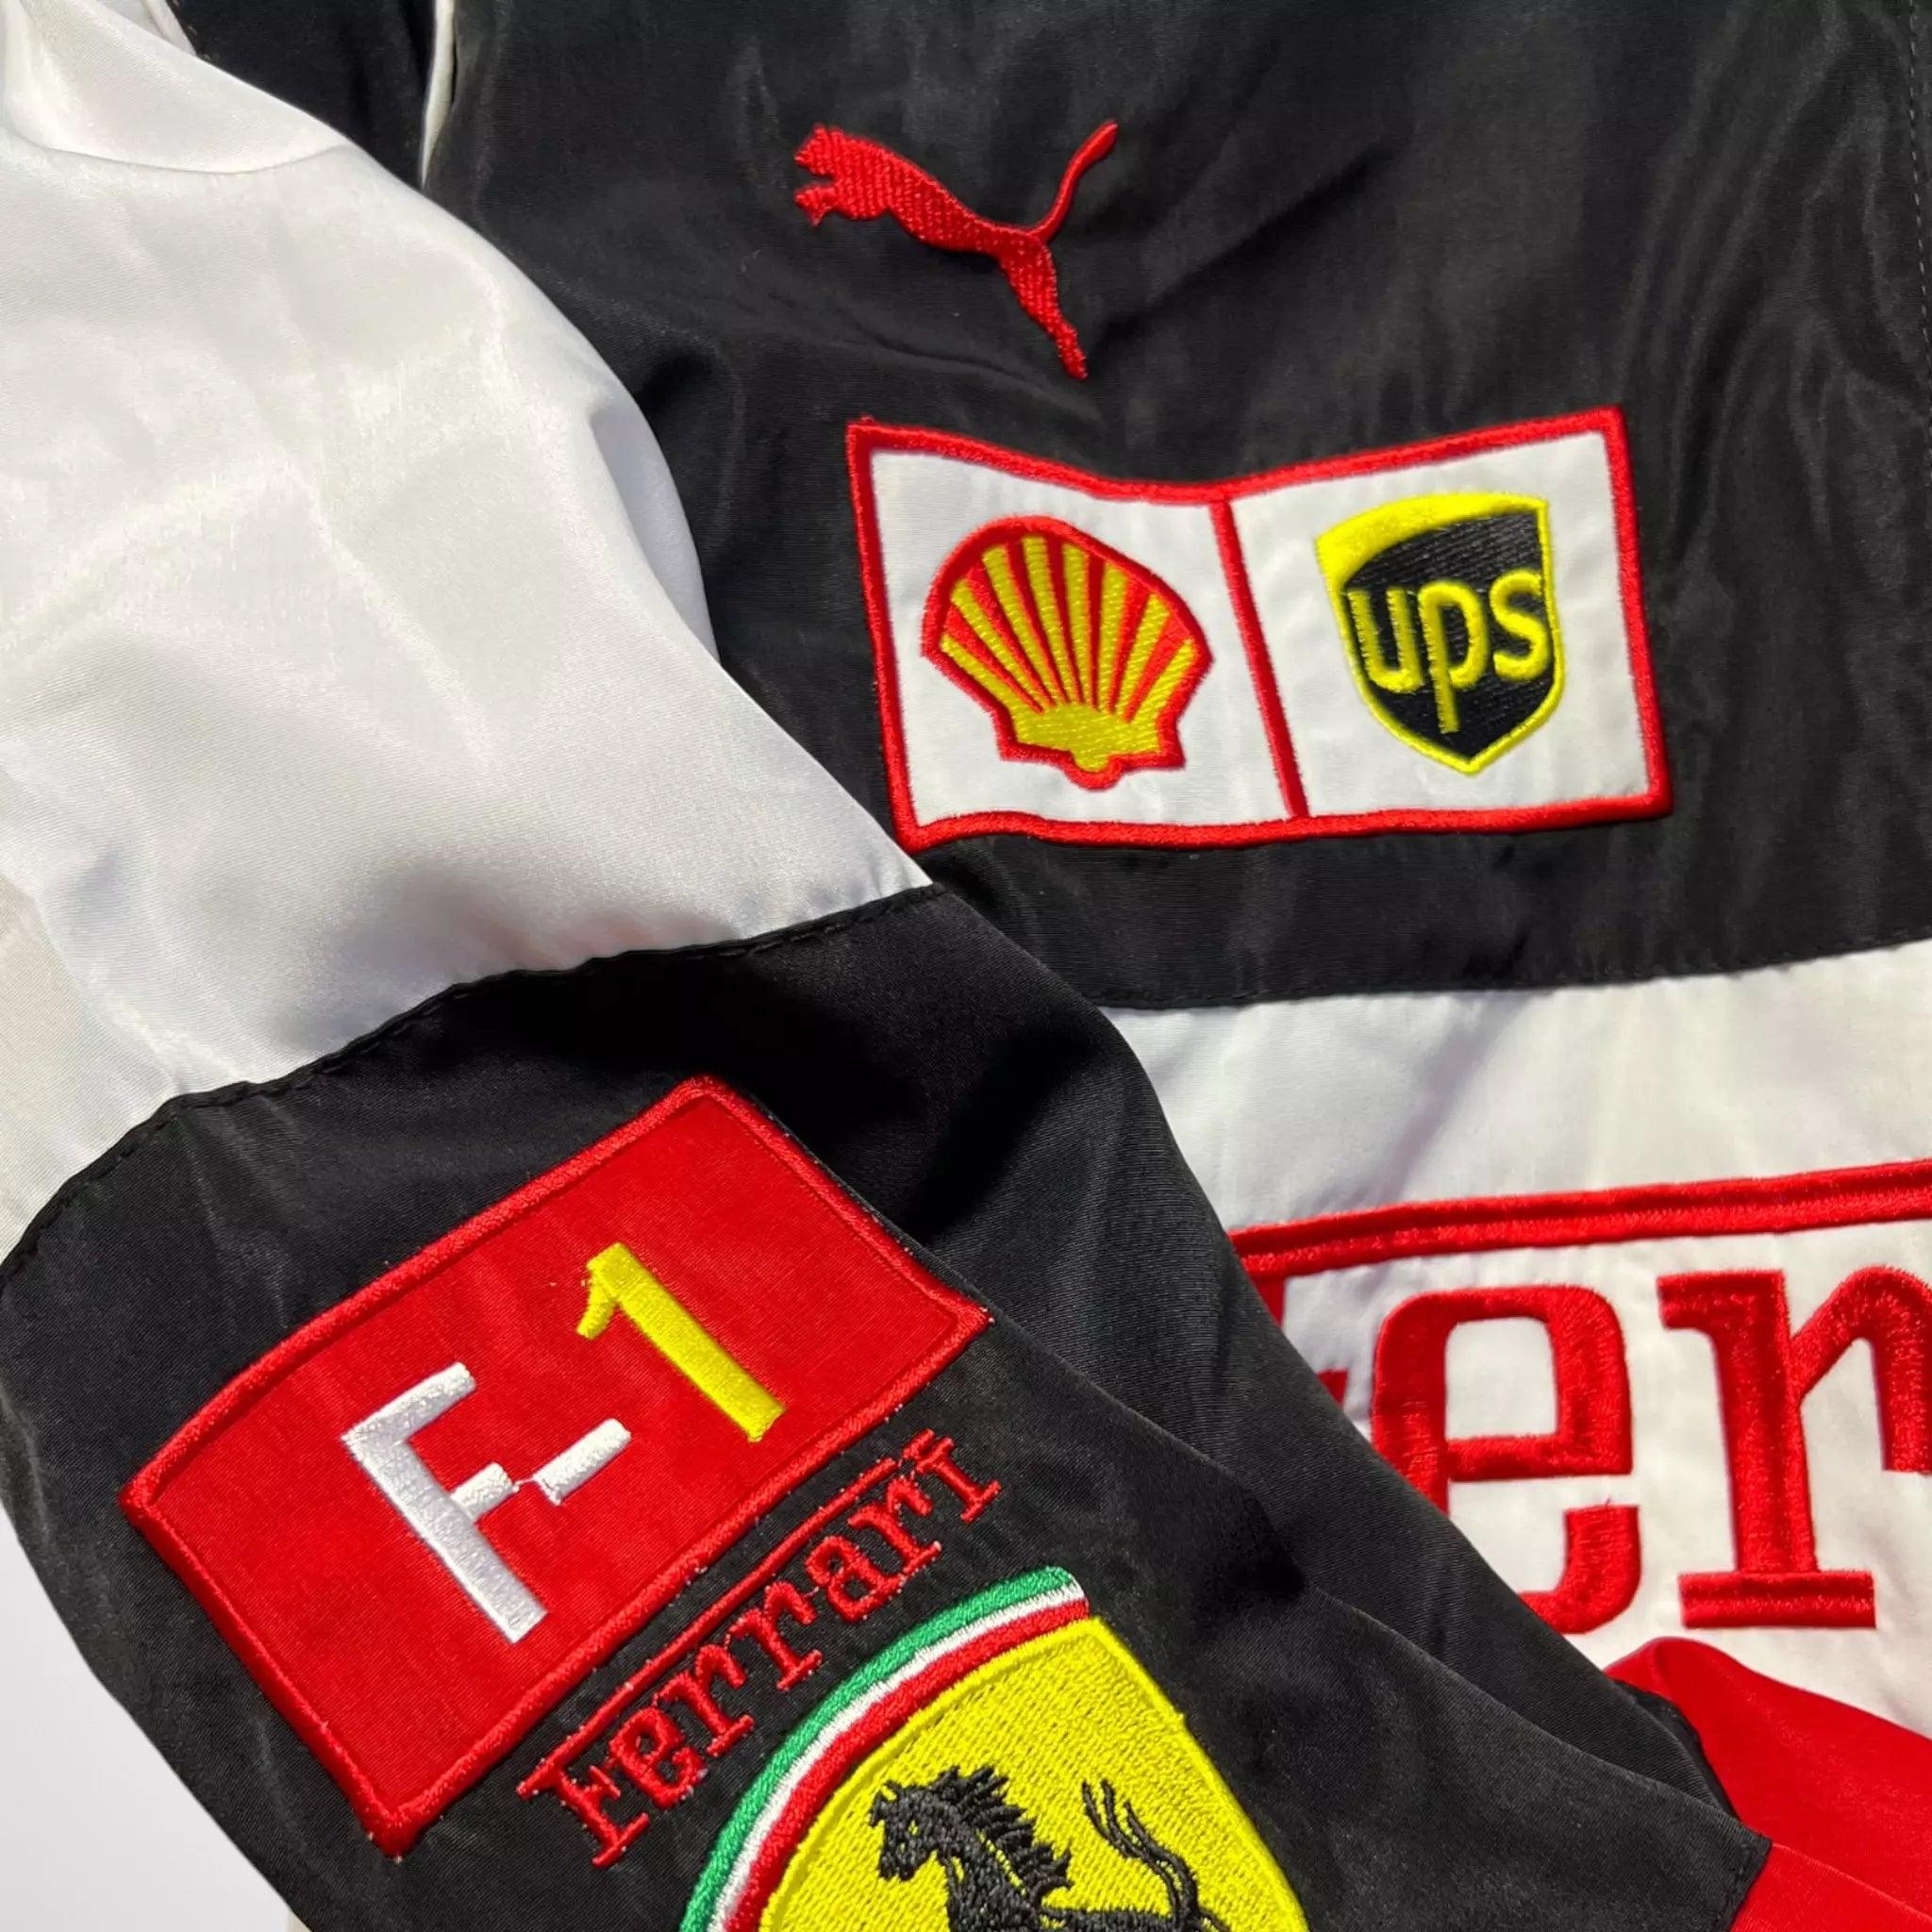 F1 Ferrari Racing Jacket | Bomber Jacket - Dash Racegear 